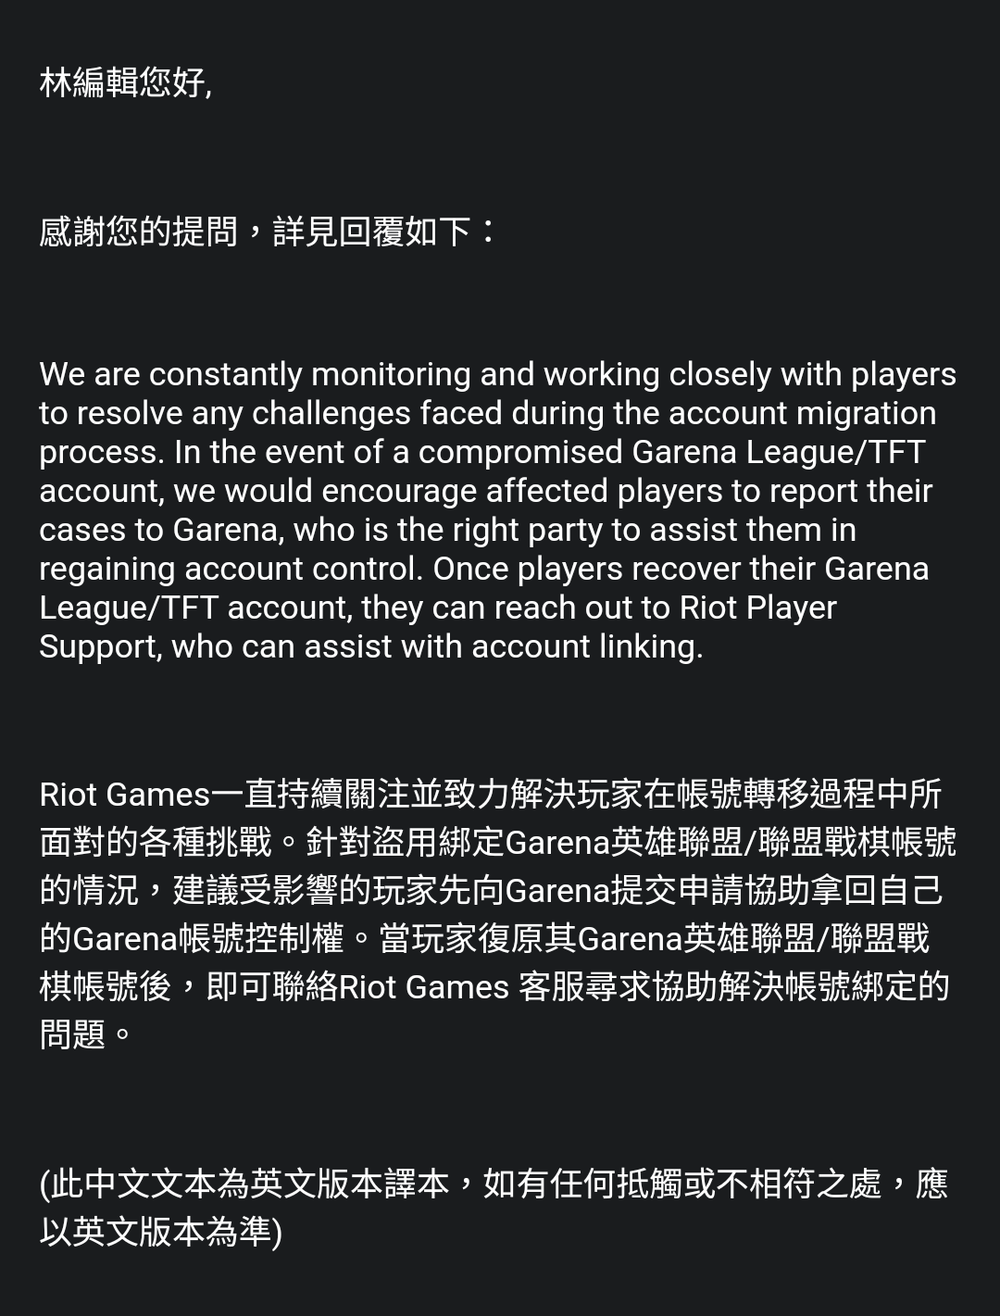 Riot Games 回應華視